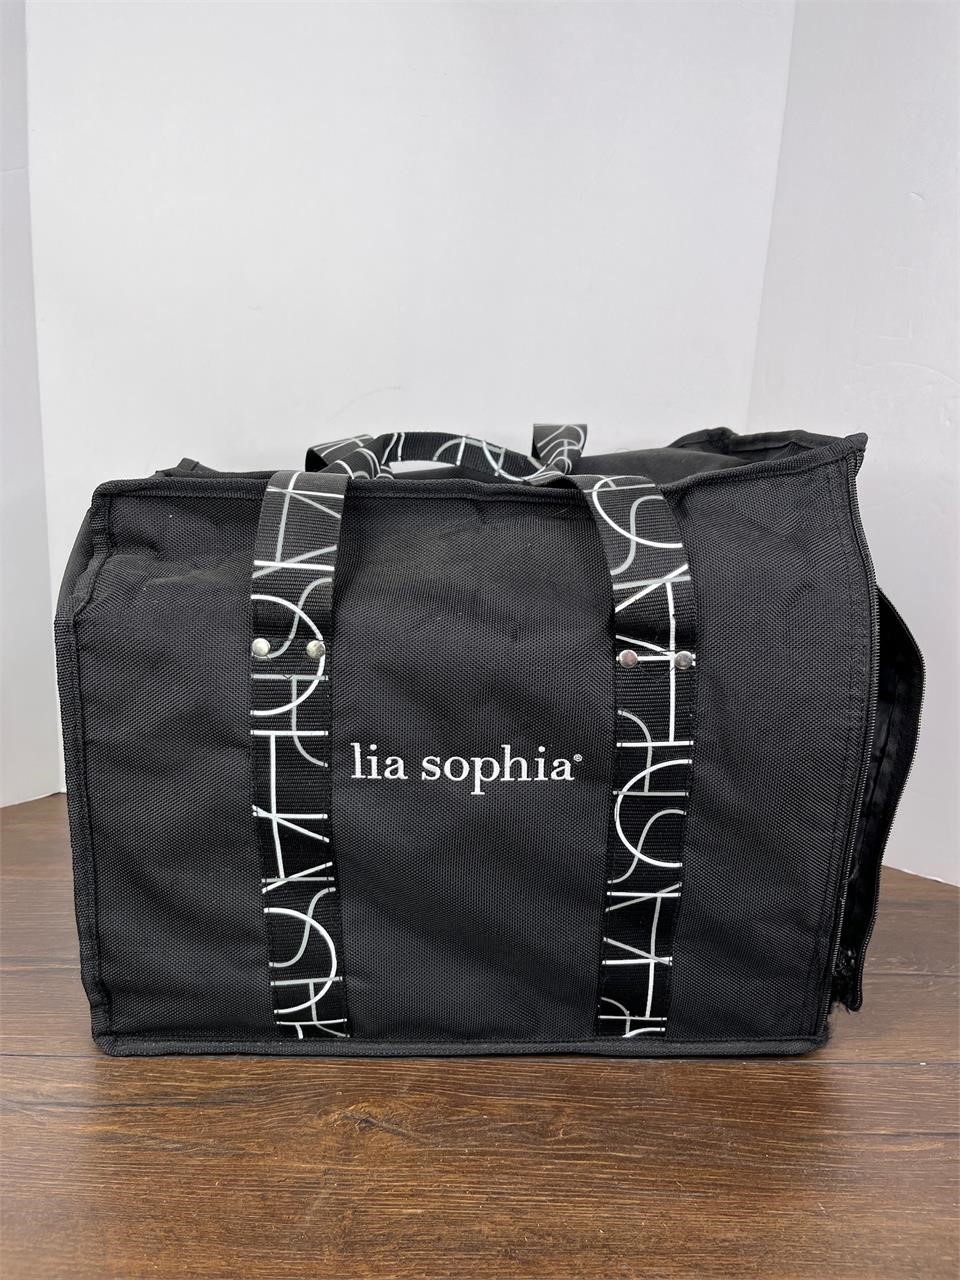 Lia Sophia Travel Bag Carrying Case